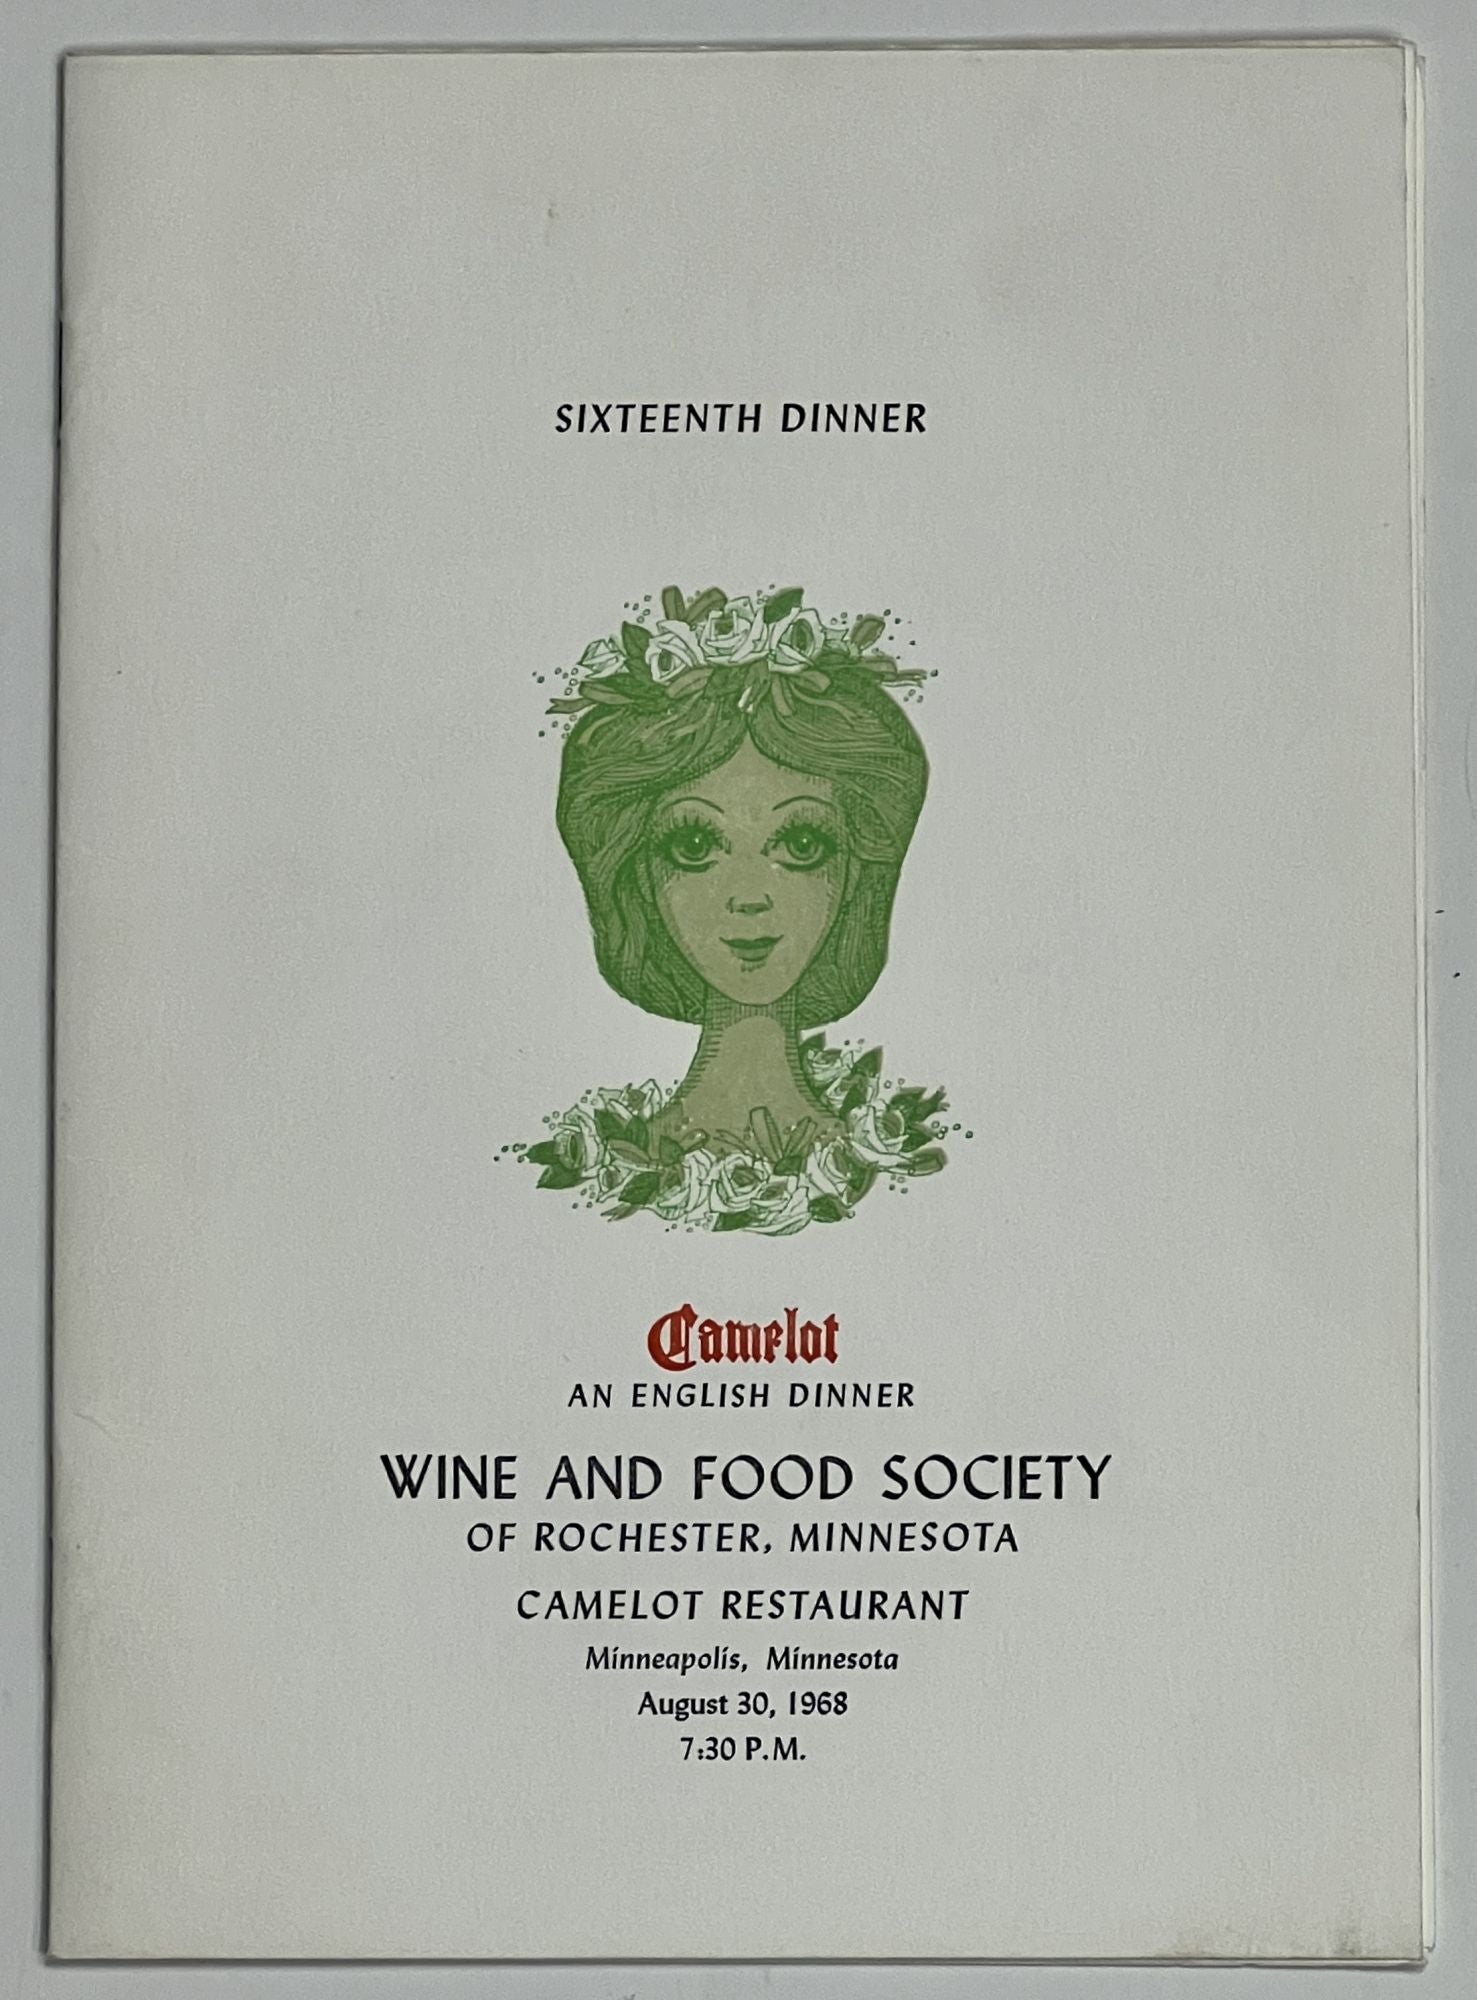 Butt, Hugh R. - CAMELOT: an English Dinner. Sixteenth Dinner. Wine and Food Society of Rochester, Minnesota. Camelot Restaurant